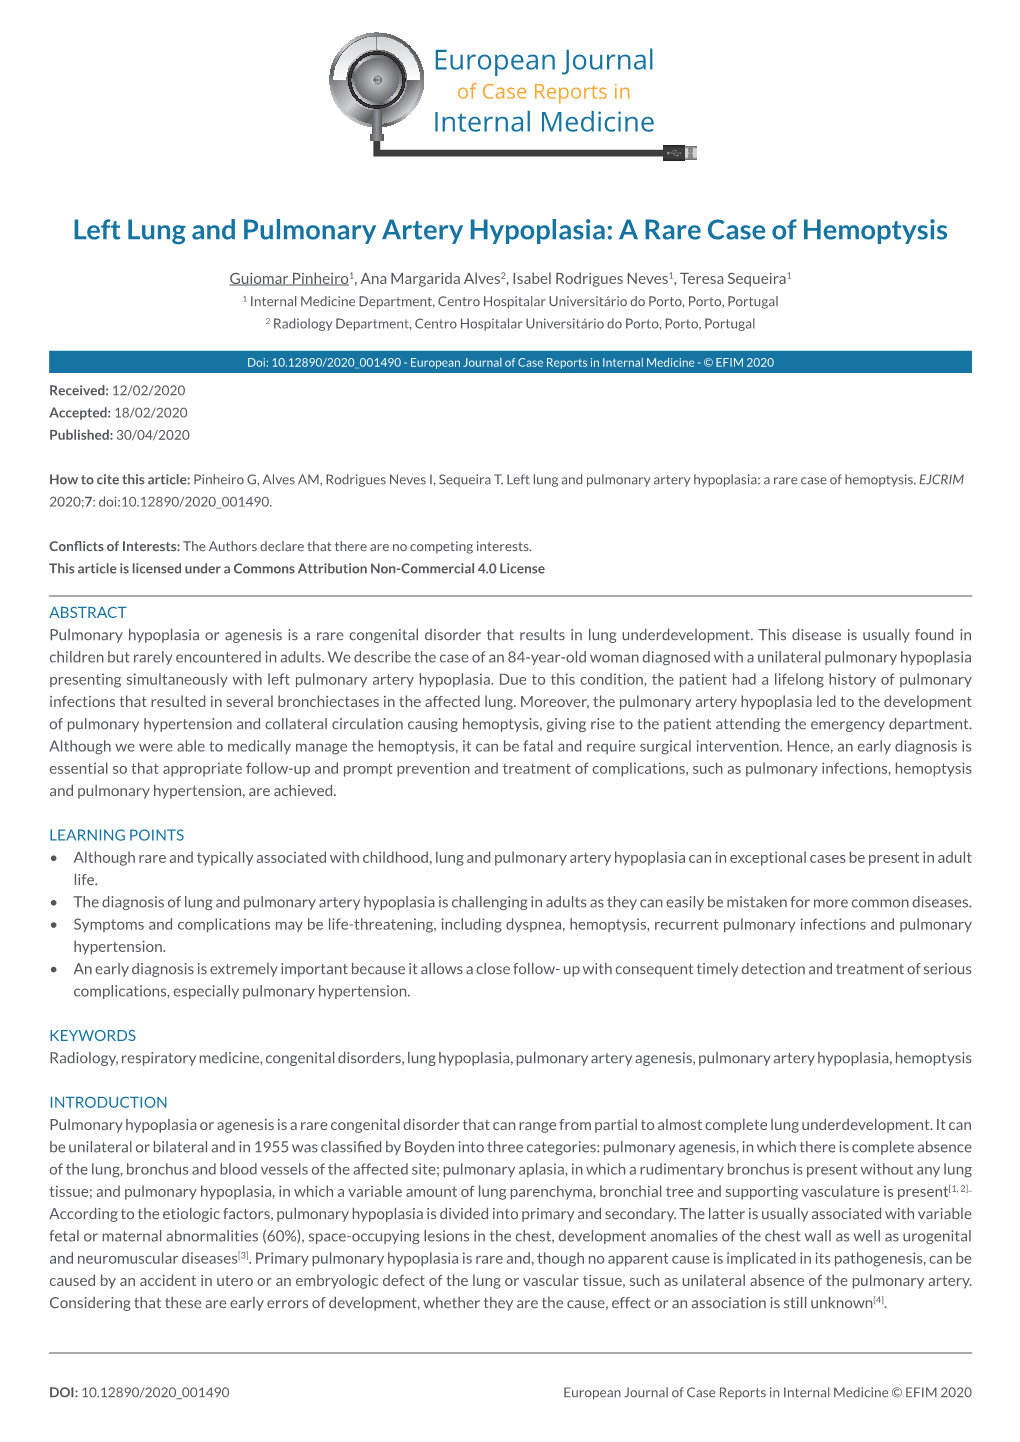 Left Lung and Pulmonary Artery Hypoplasia: a Rare Case of Hemoptysis